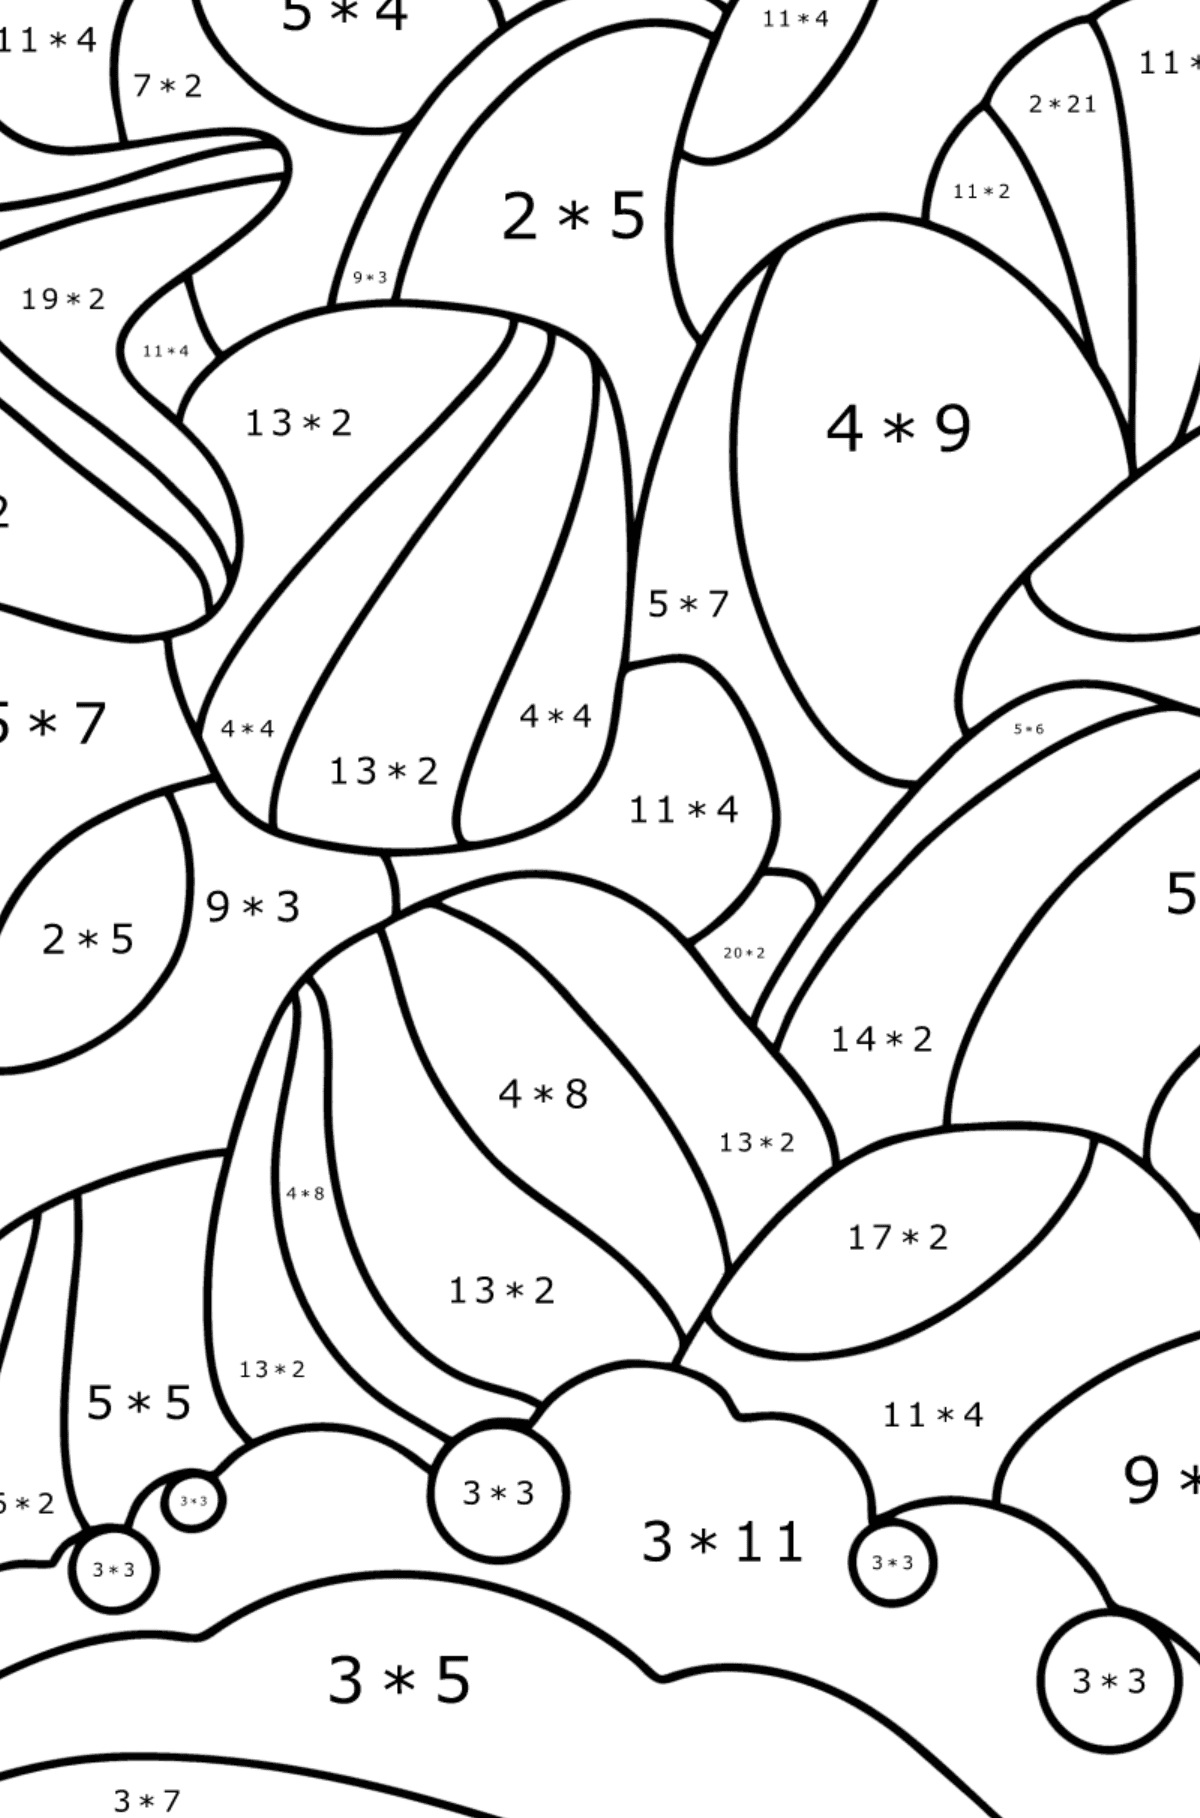 Doodle Malvorlagen für Kinder - Sea Pebbles - Mathe Ausmalbilder - Multiplikation für Kinder